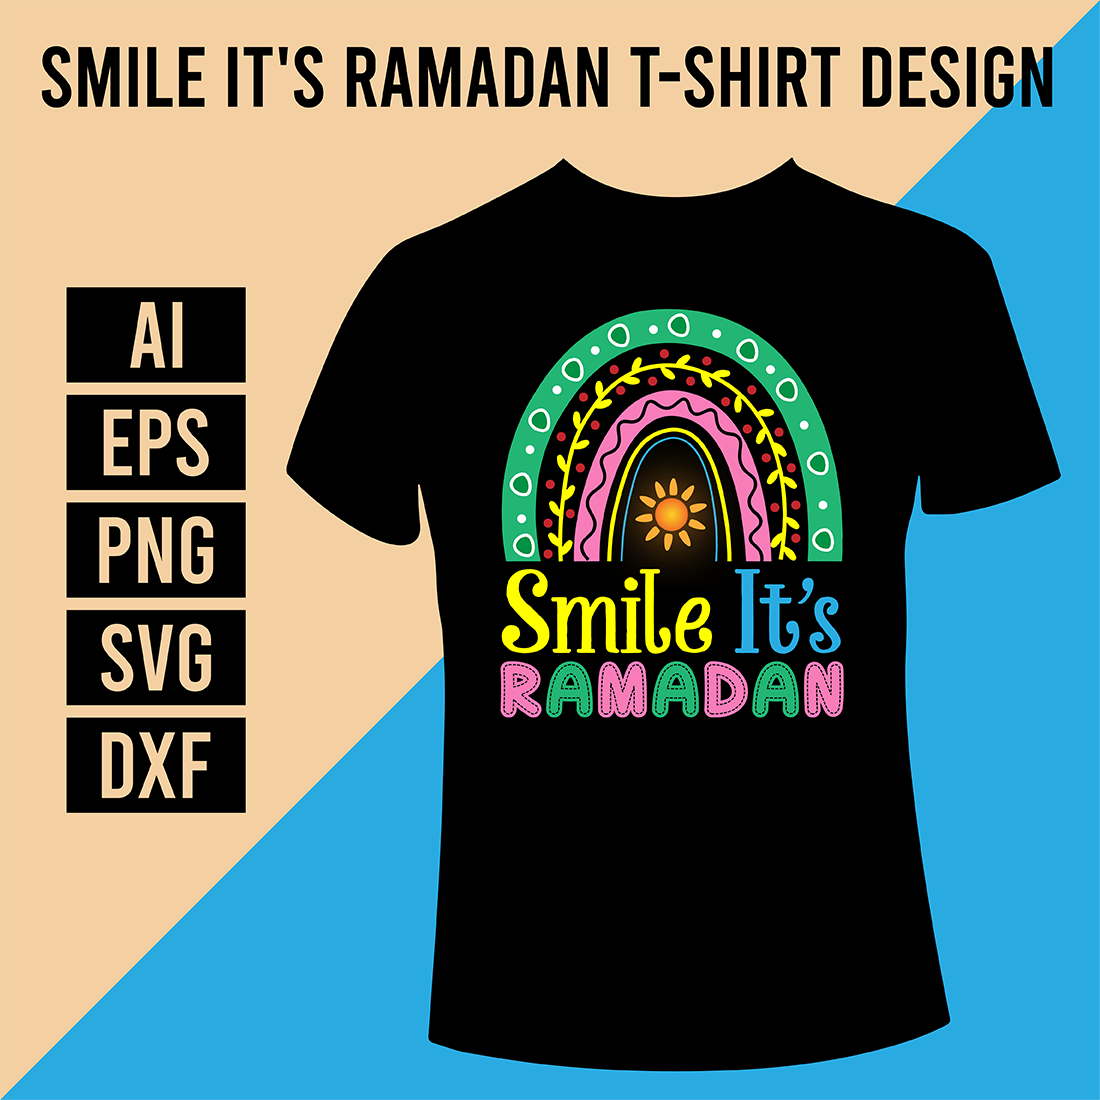 Smile It\'s Ramadan T-Shirt Design cover image.